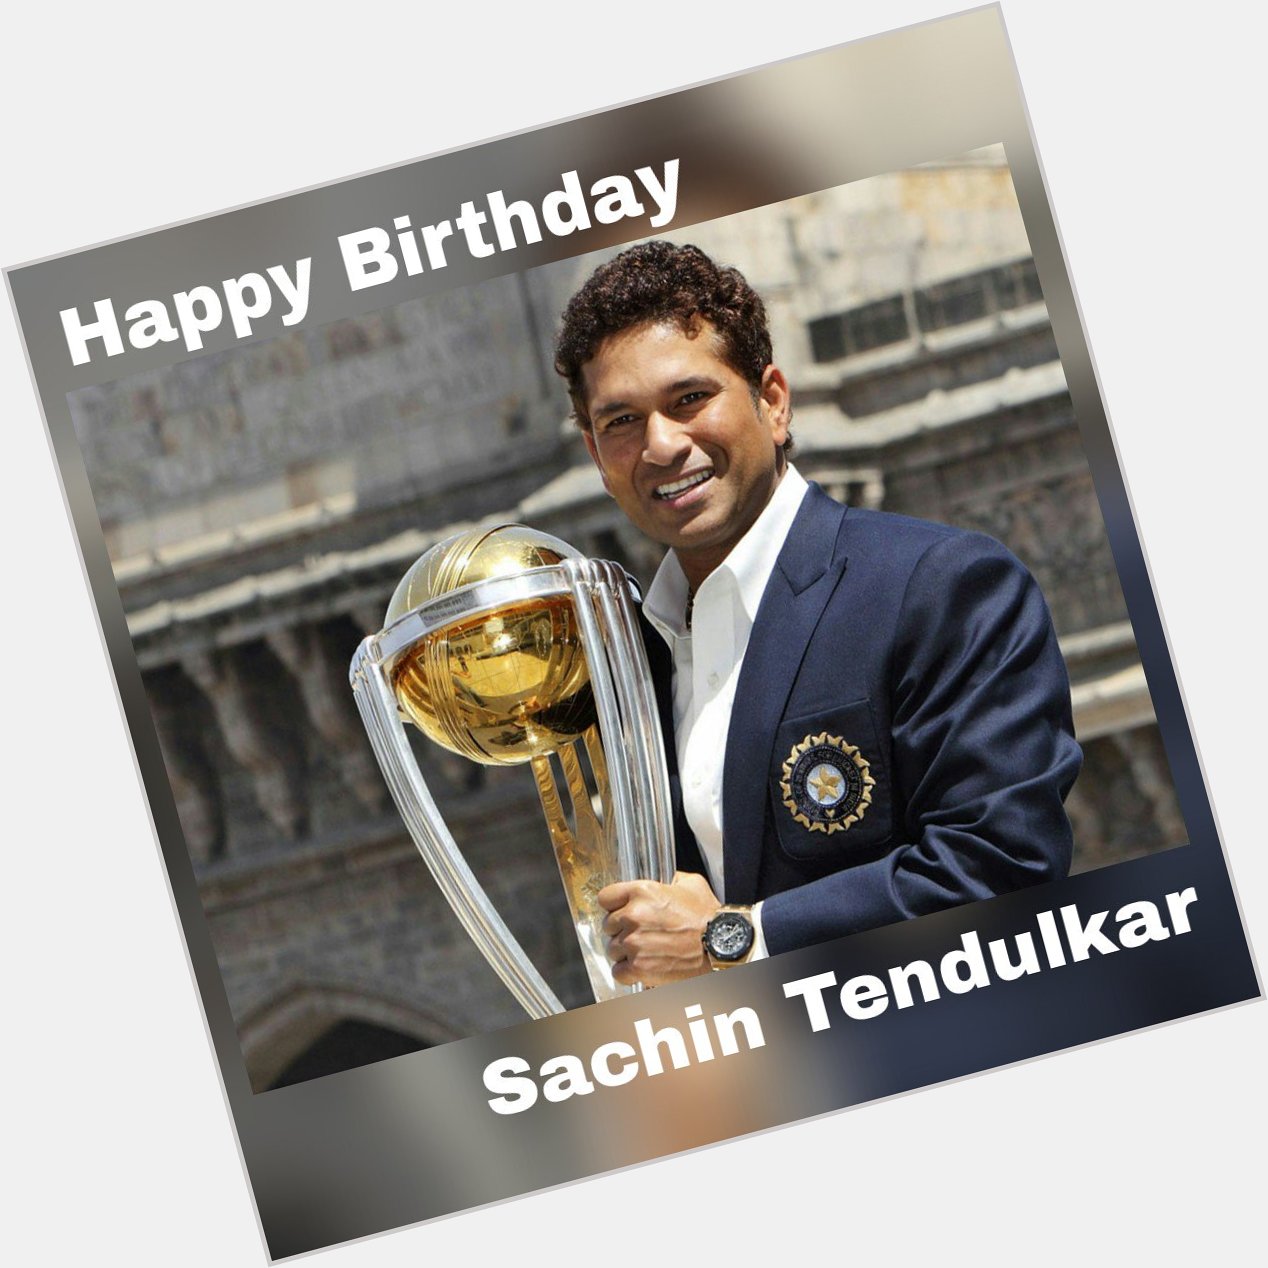    Happy Birthday Sachin Tendulkar 